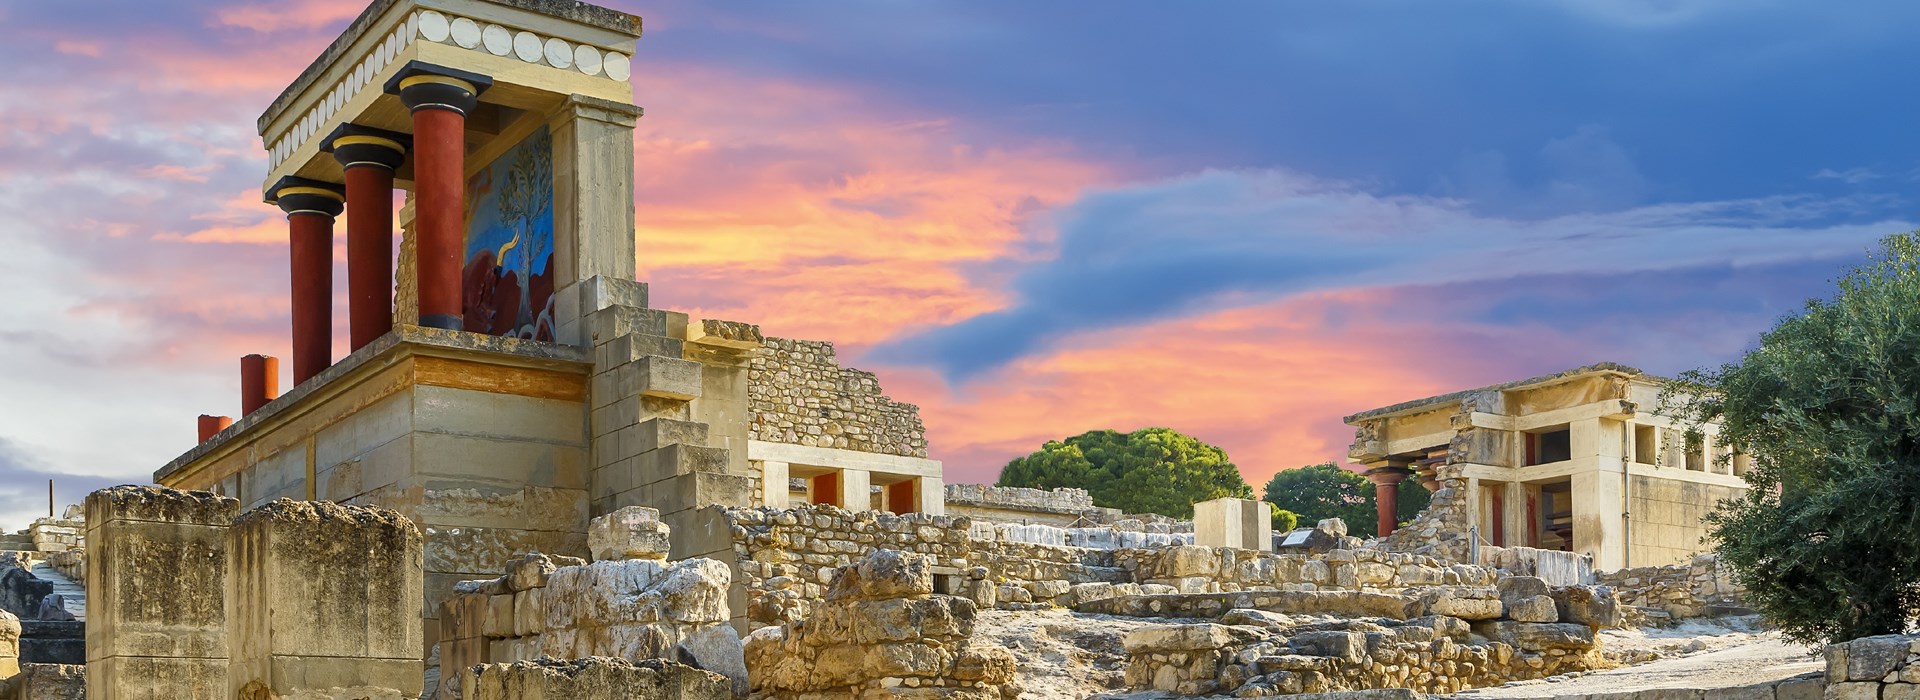 Visiter Le Palais de Knossos - Crète